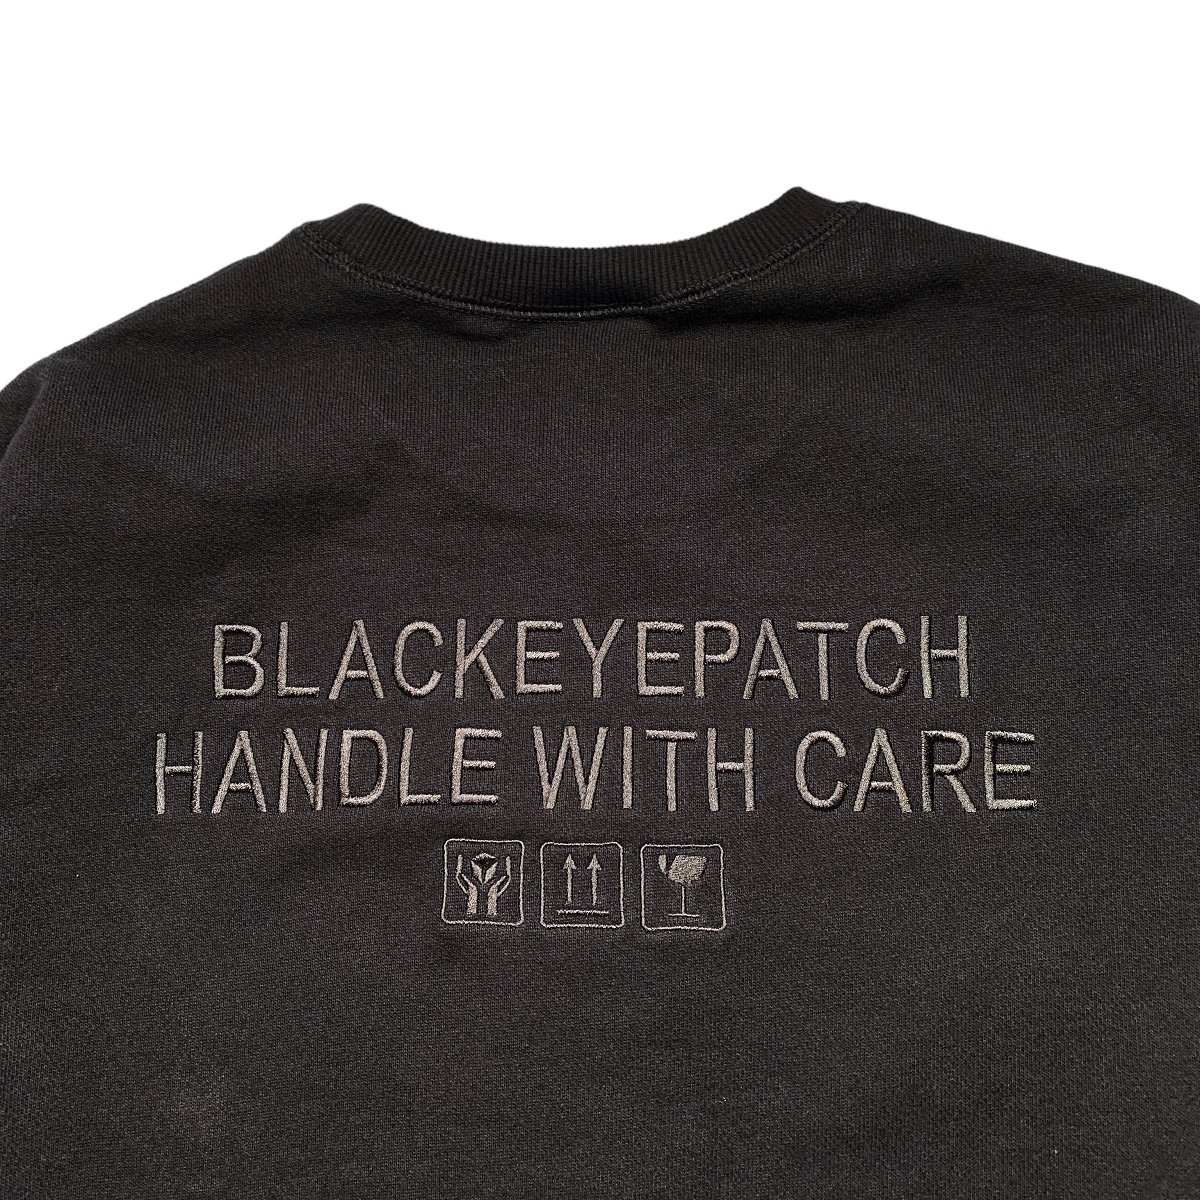 black eye patch HWC SAME SWEAT グレー L - 通販 - www.nbeauty.cz